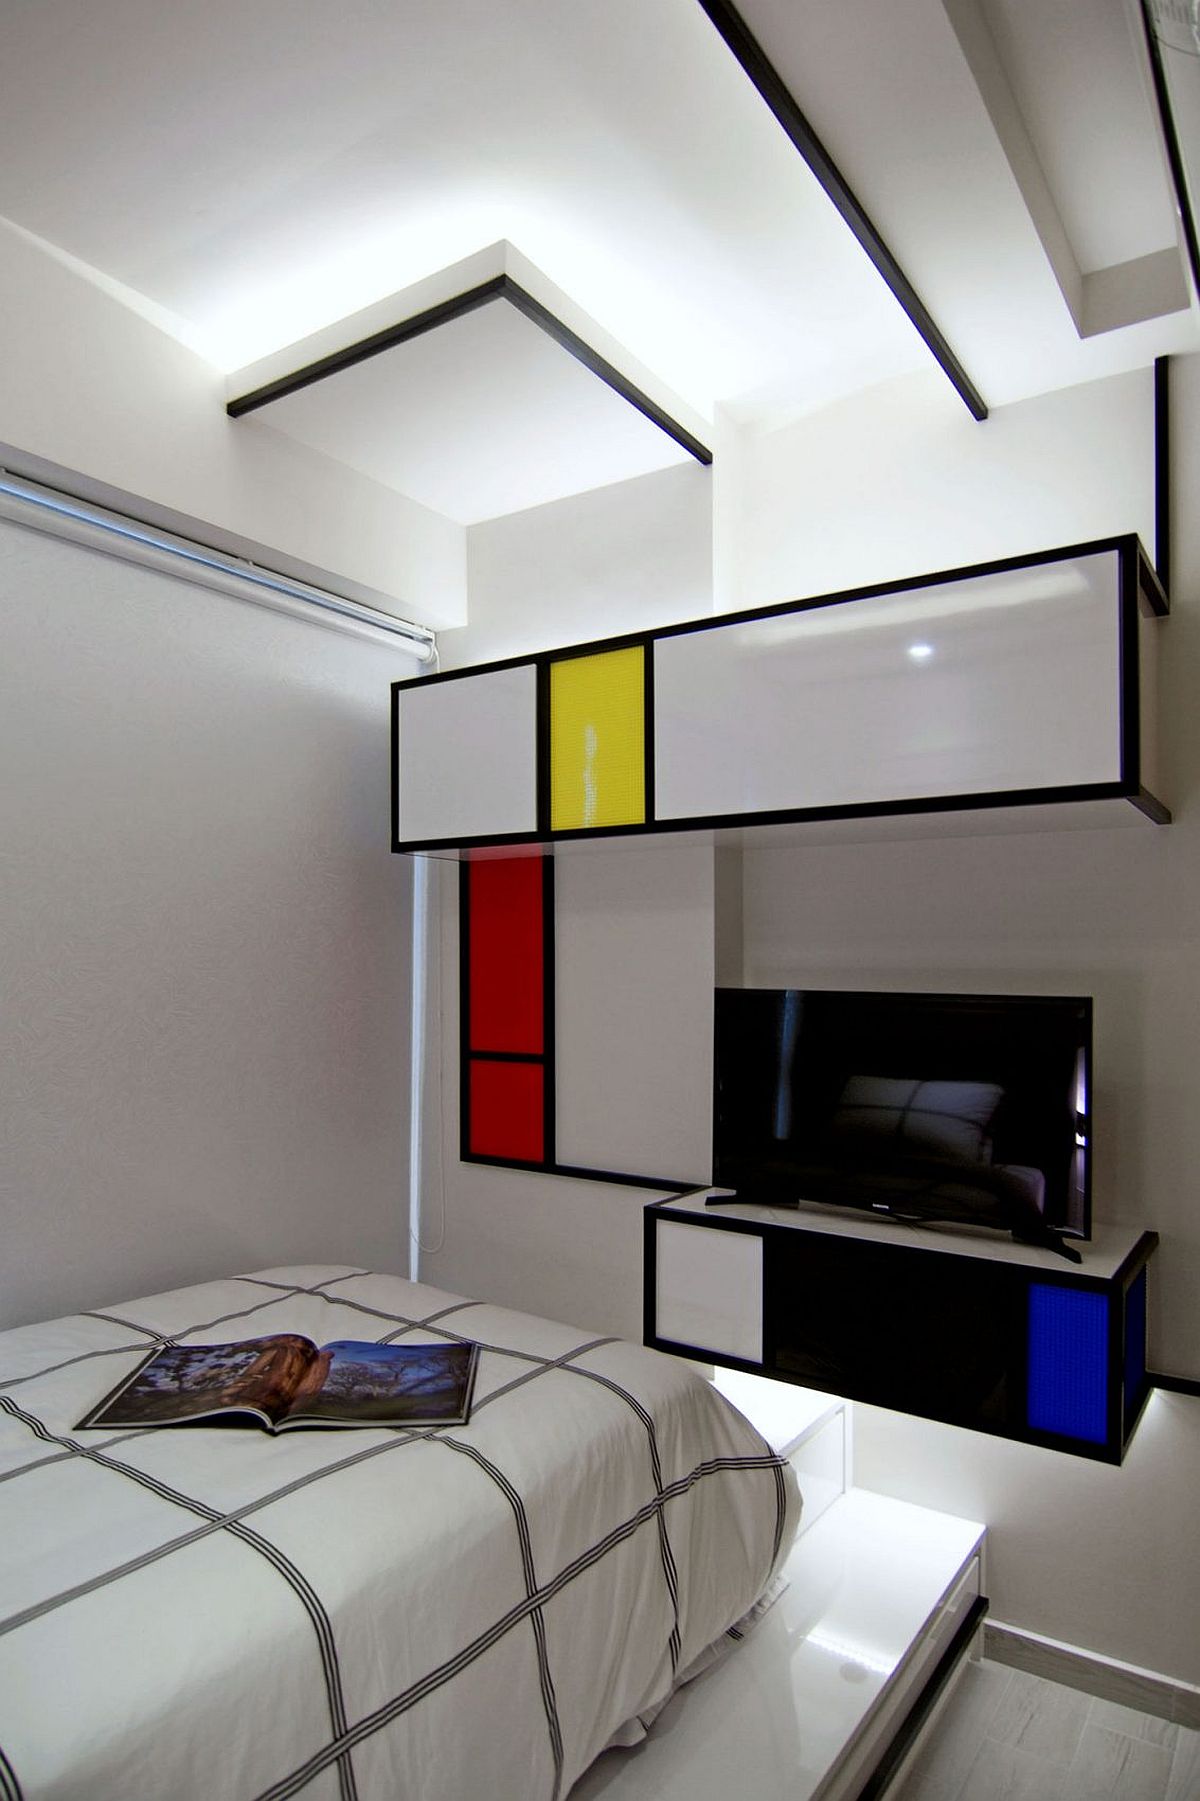 Influence of De Stijl art movement makes its presence felt inside this bedroom